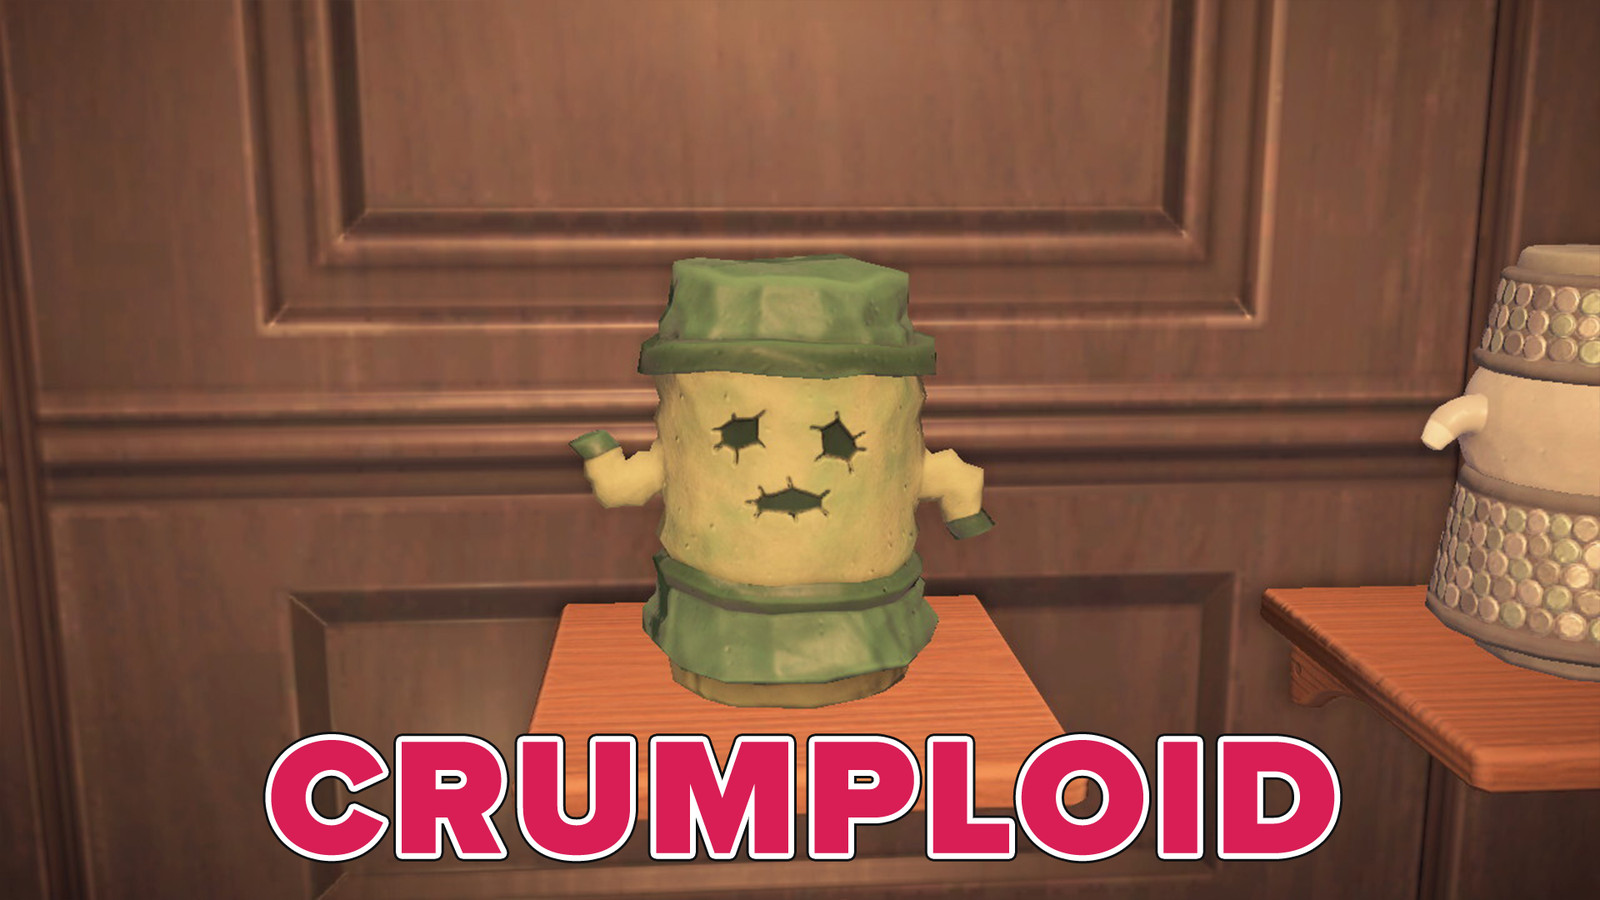 Crumploid